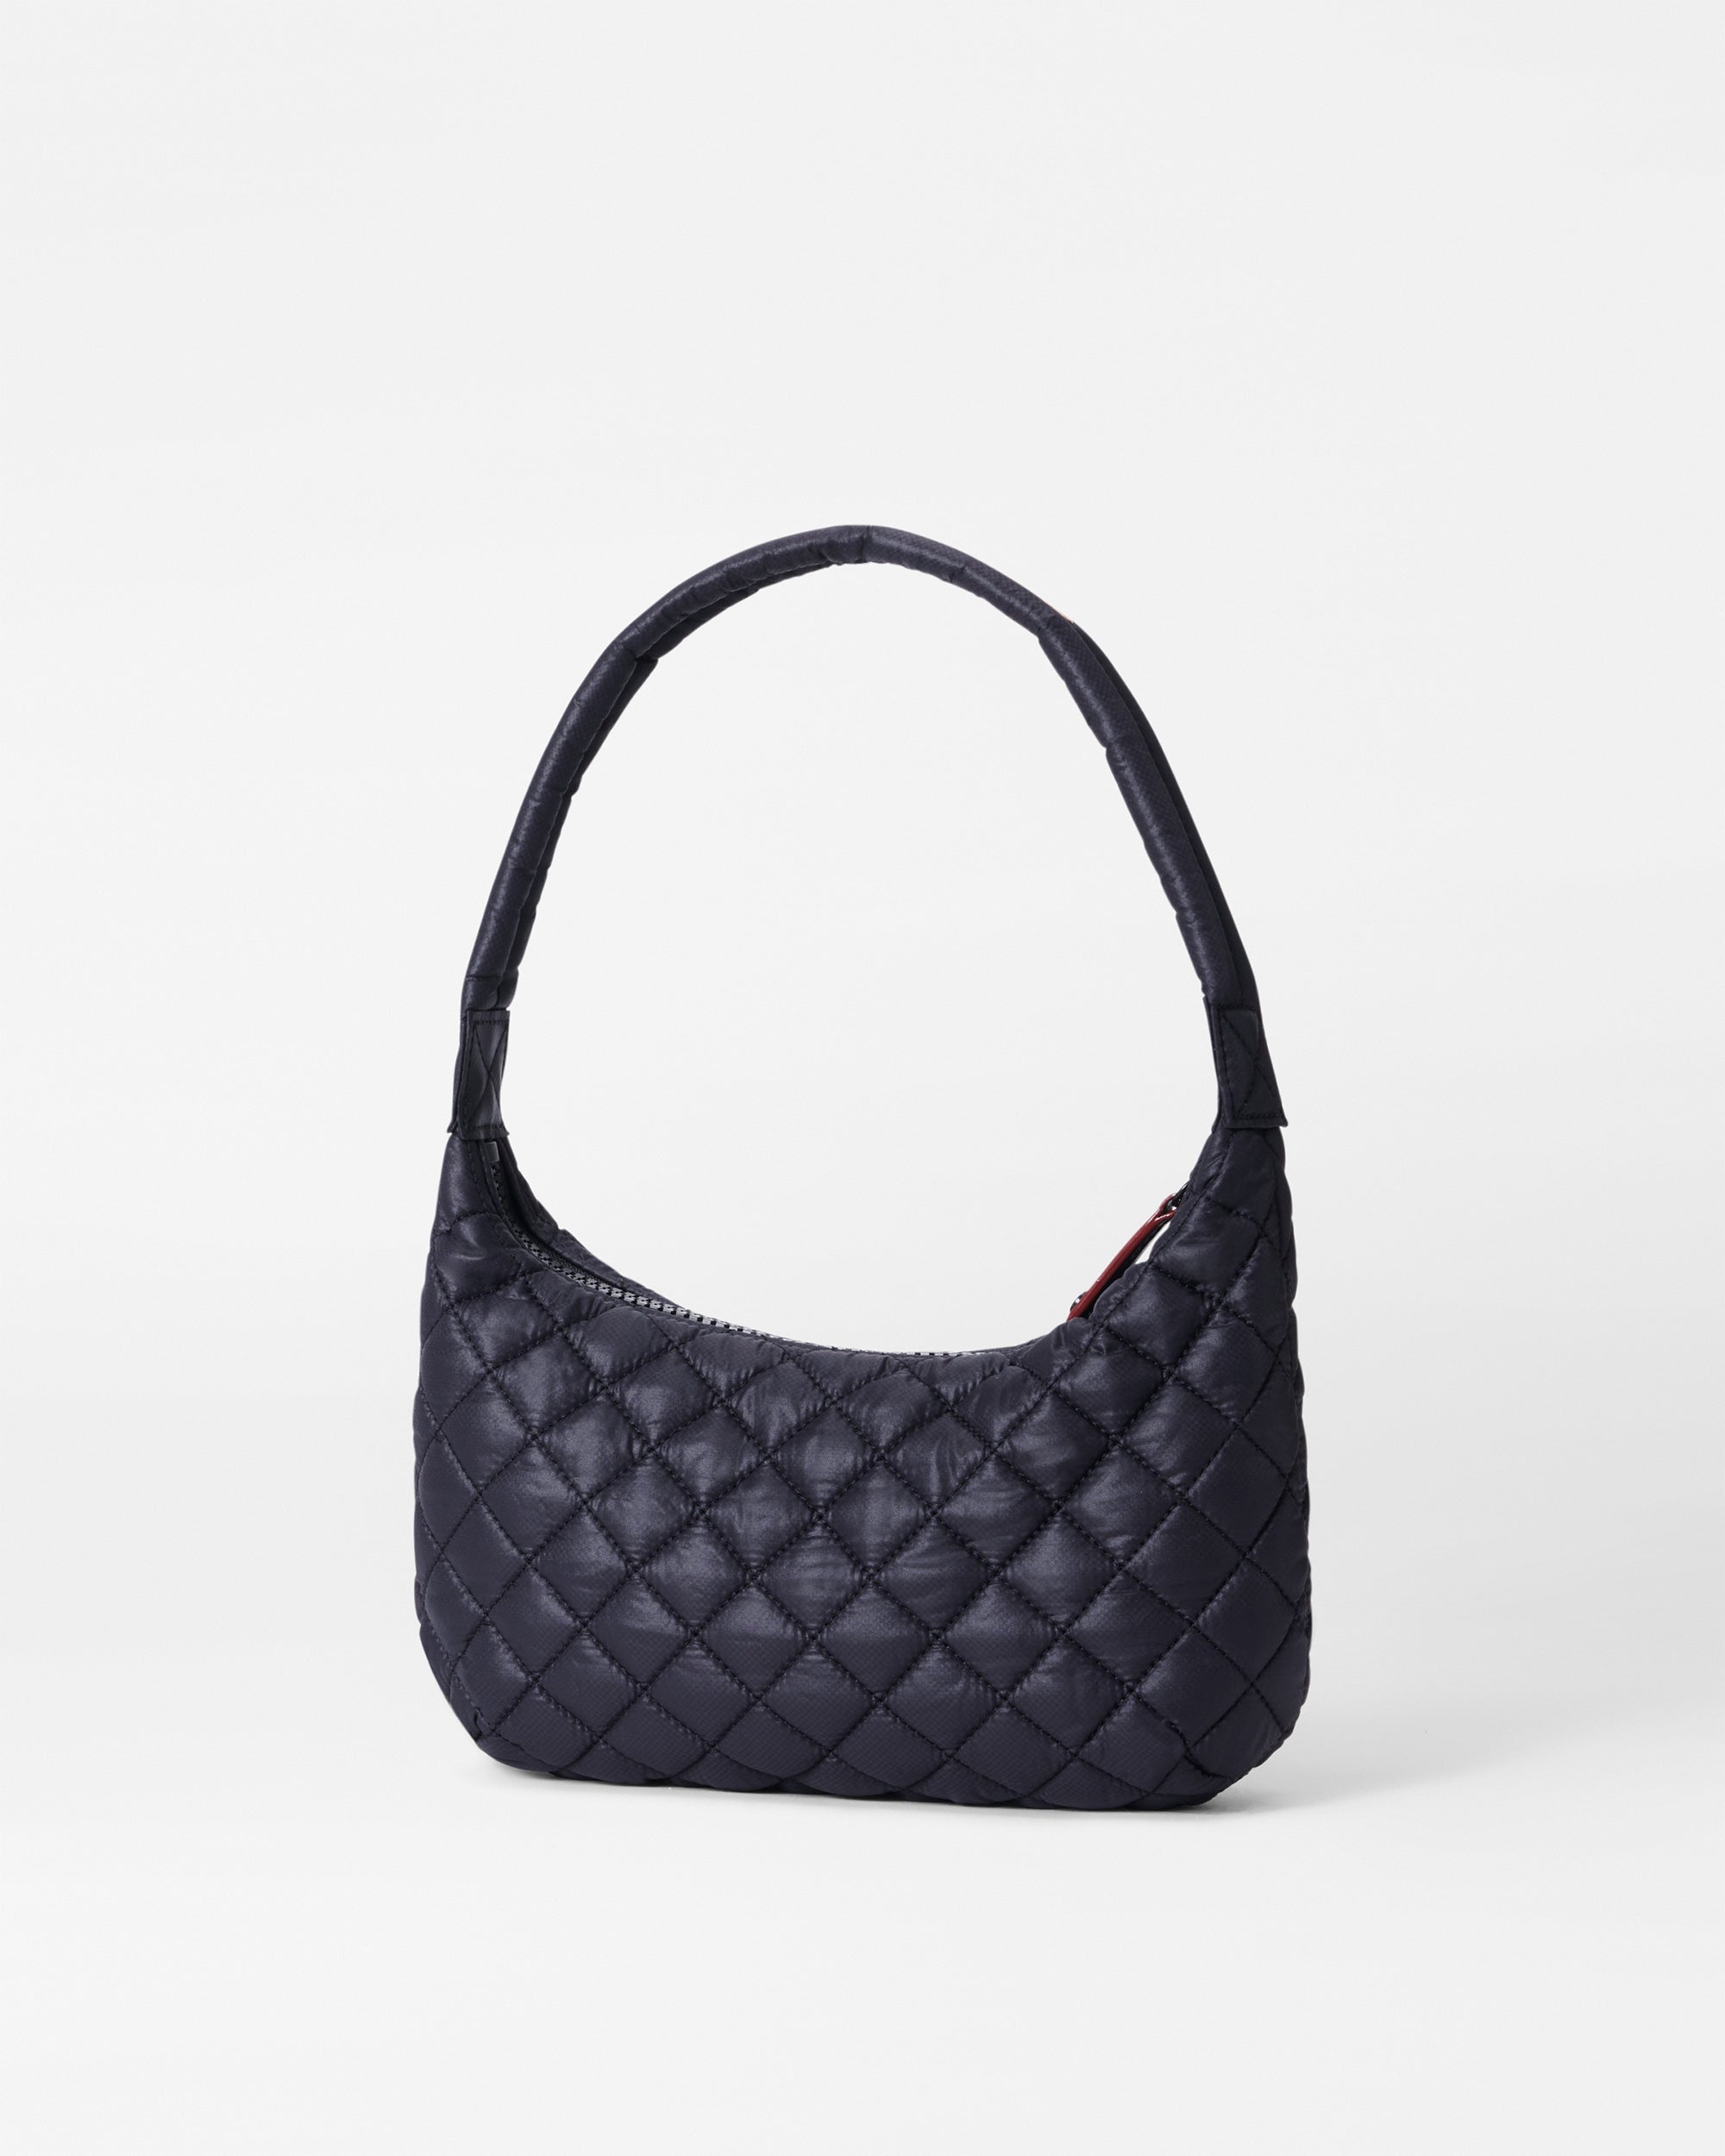 Bottega Veneta Women's Small Wallace Leather Top-Handle Bag